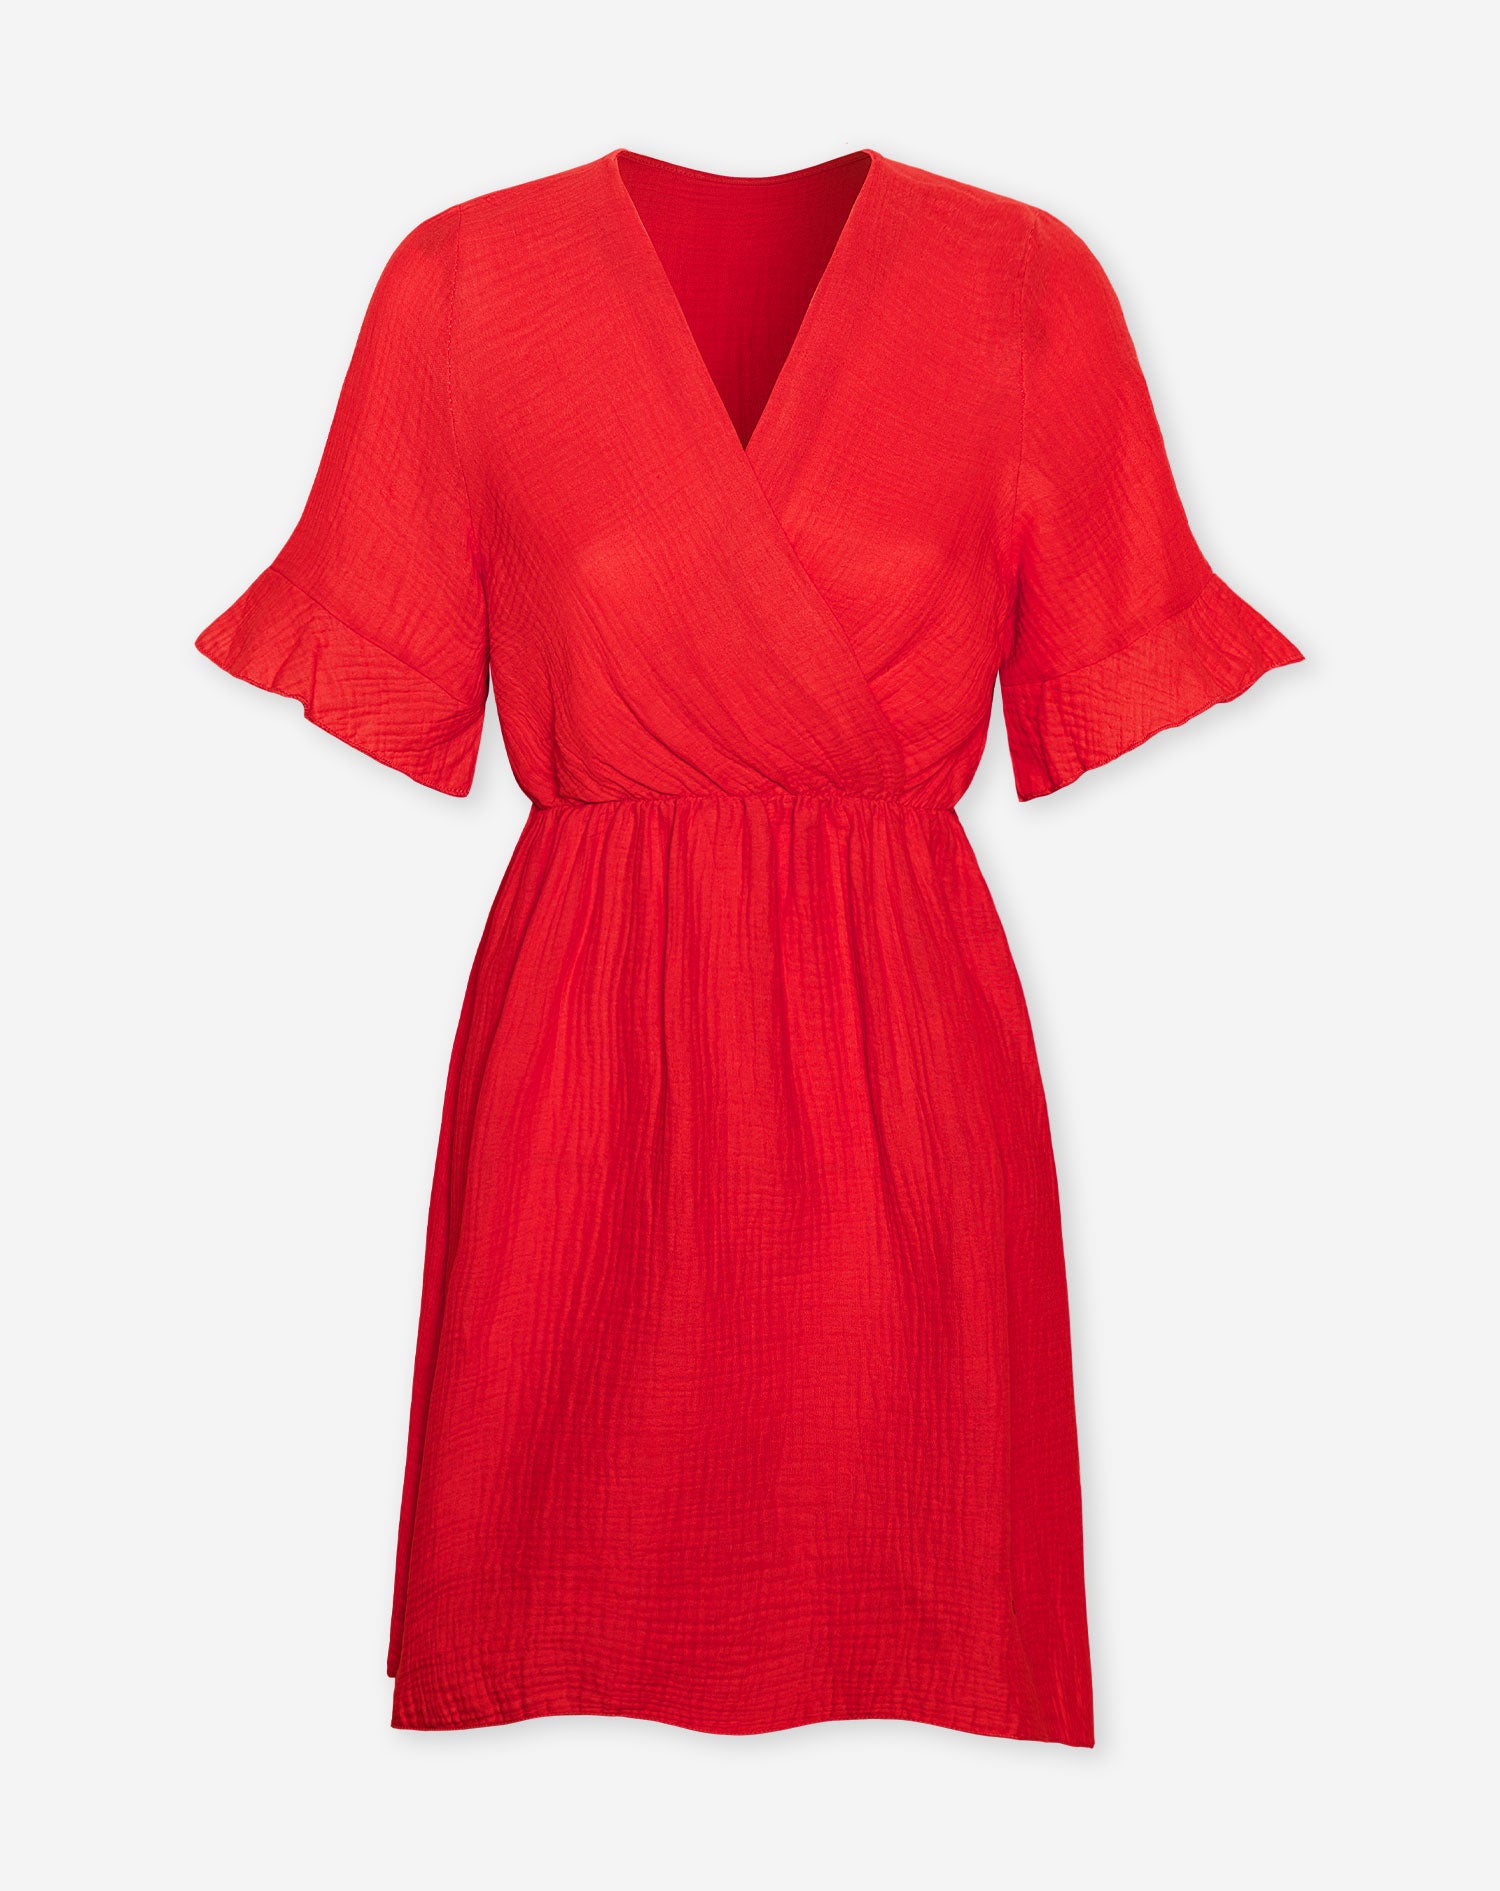 SYLVIE MUSSELINE DRESS RED